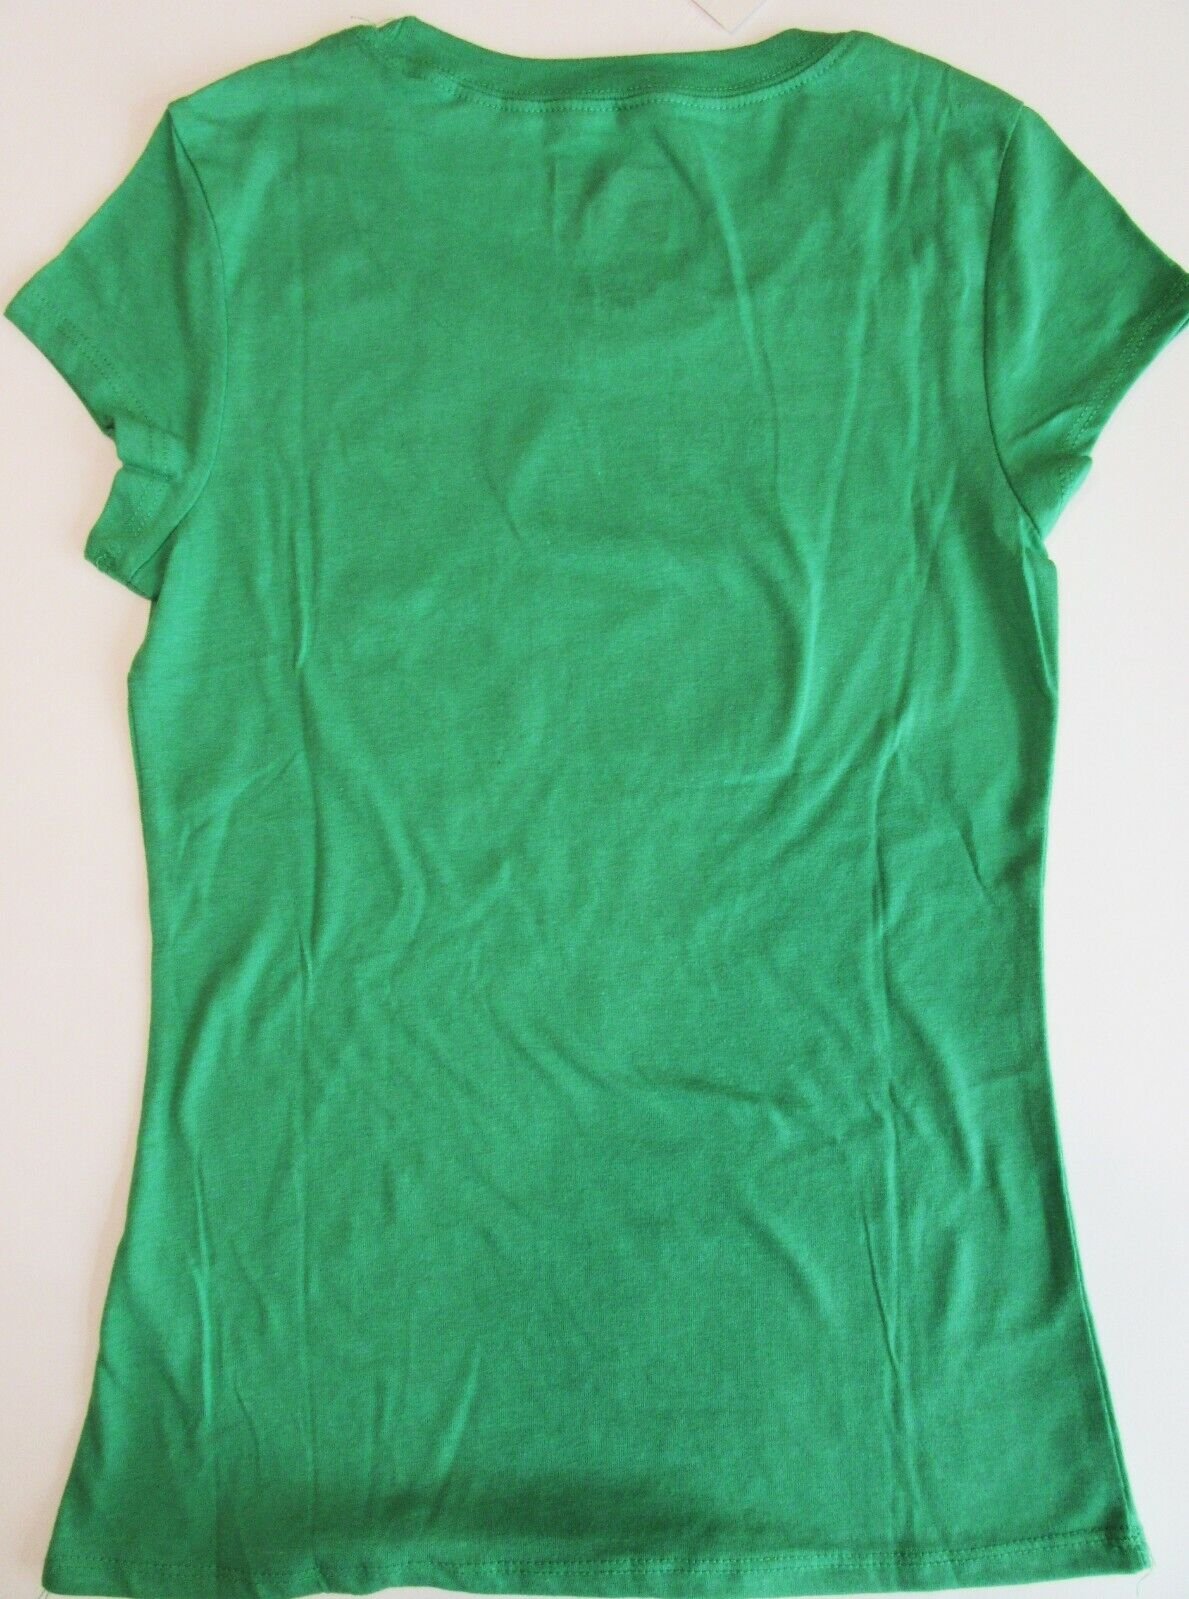 MTV ~ Music Television Medium Kelly Green Womens T-Shirt  ~ Size M ~ T Shirt